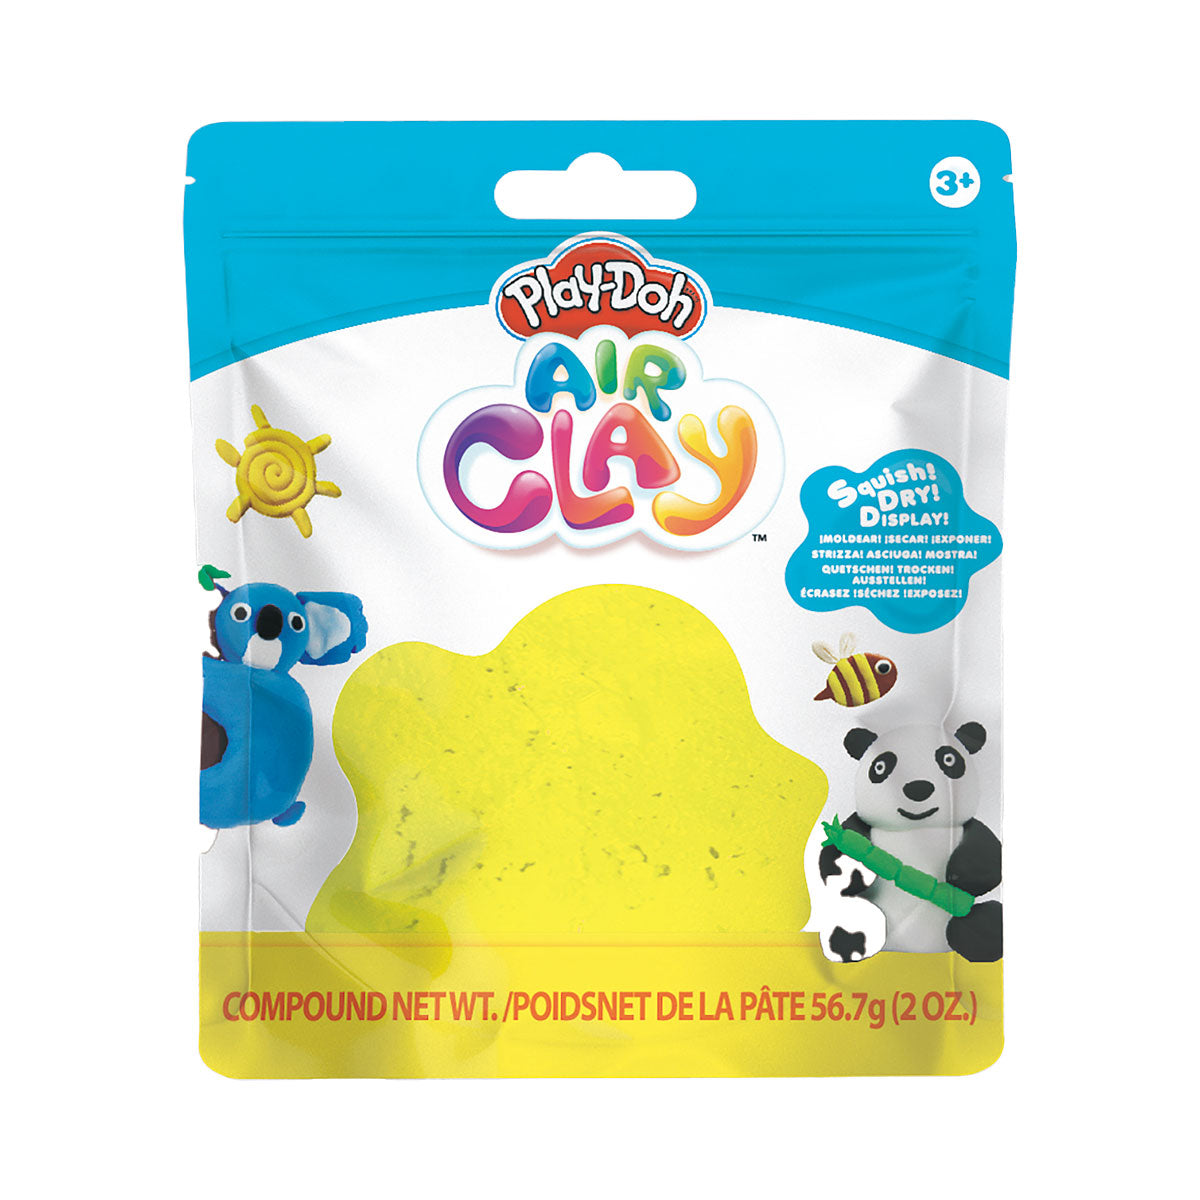 Play-Doh Air Clay Yellow 2oz